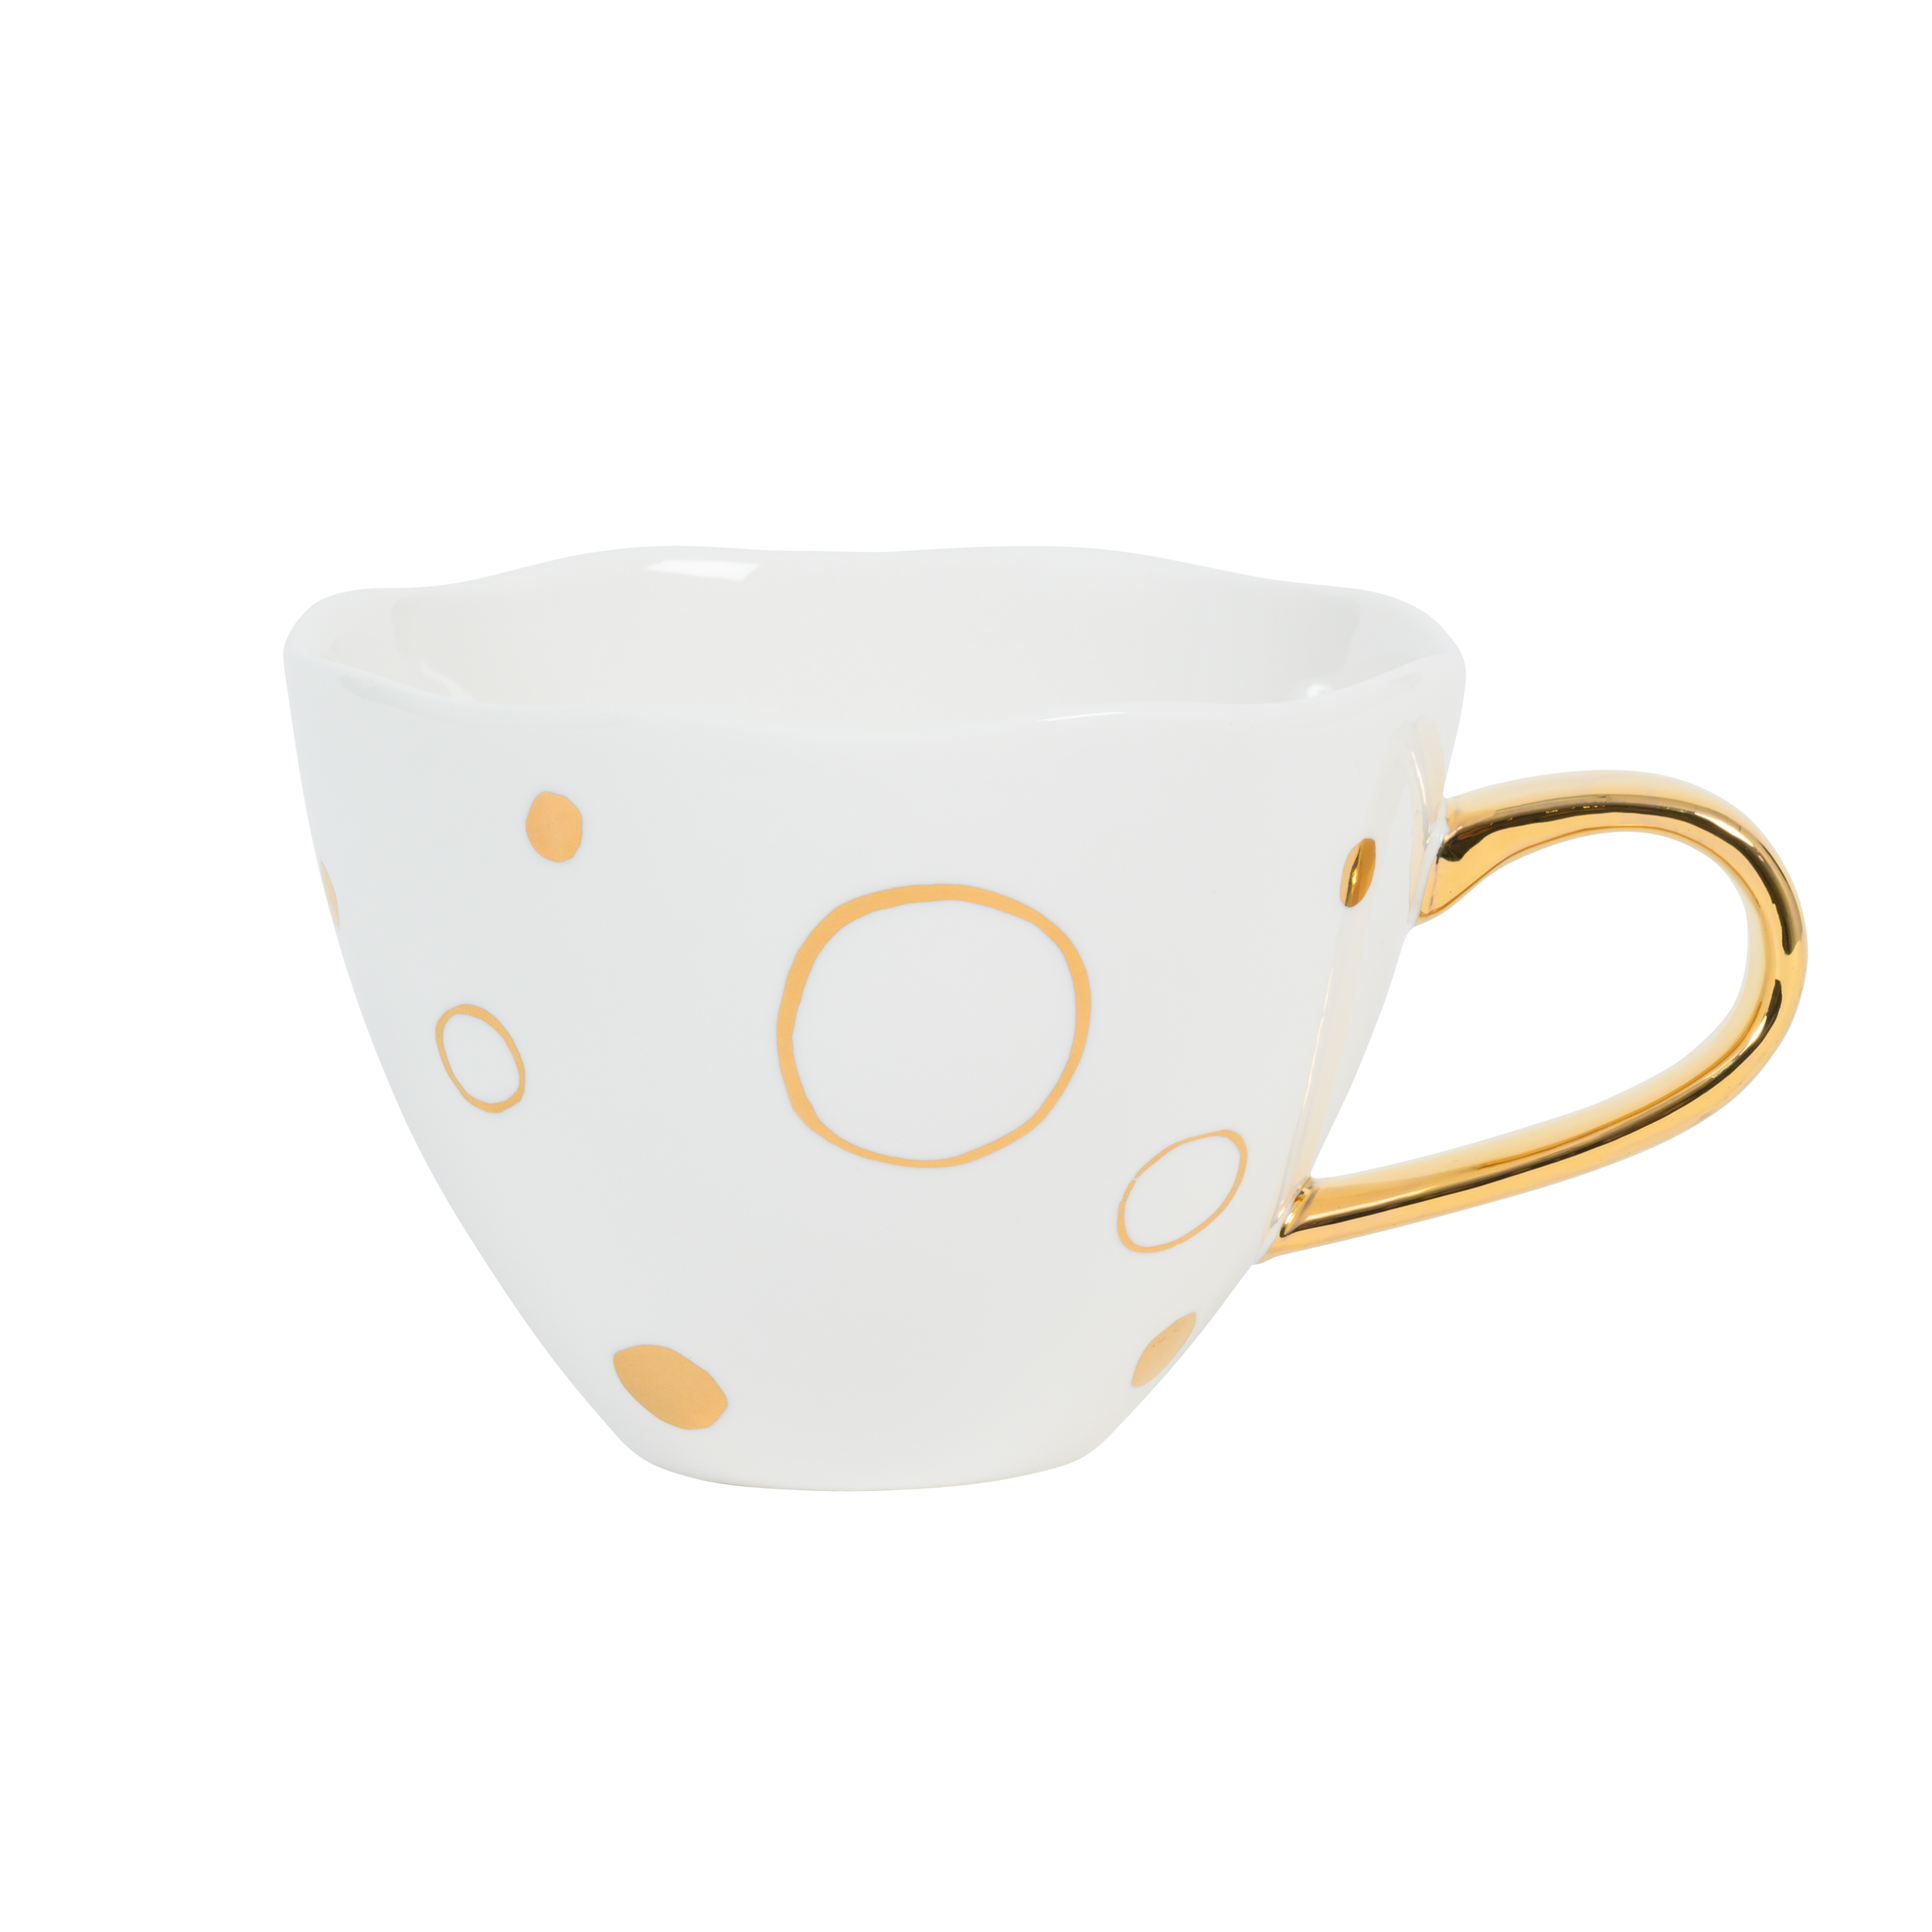 Good morning cappuccino cup "circle gold"